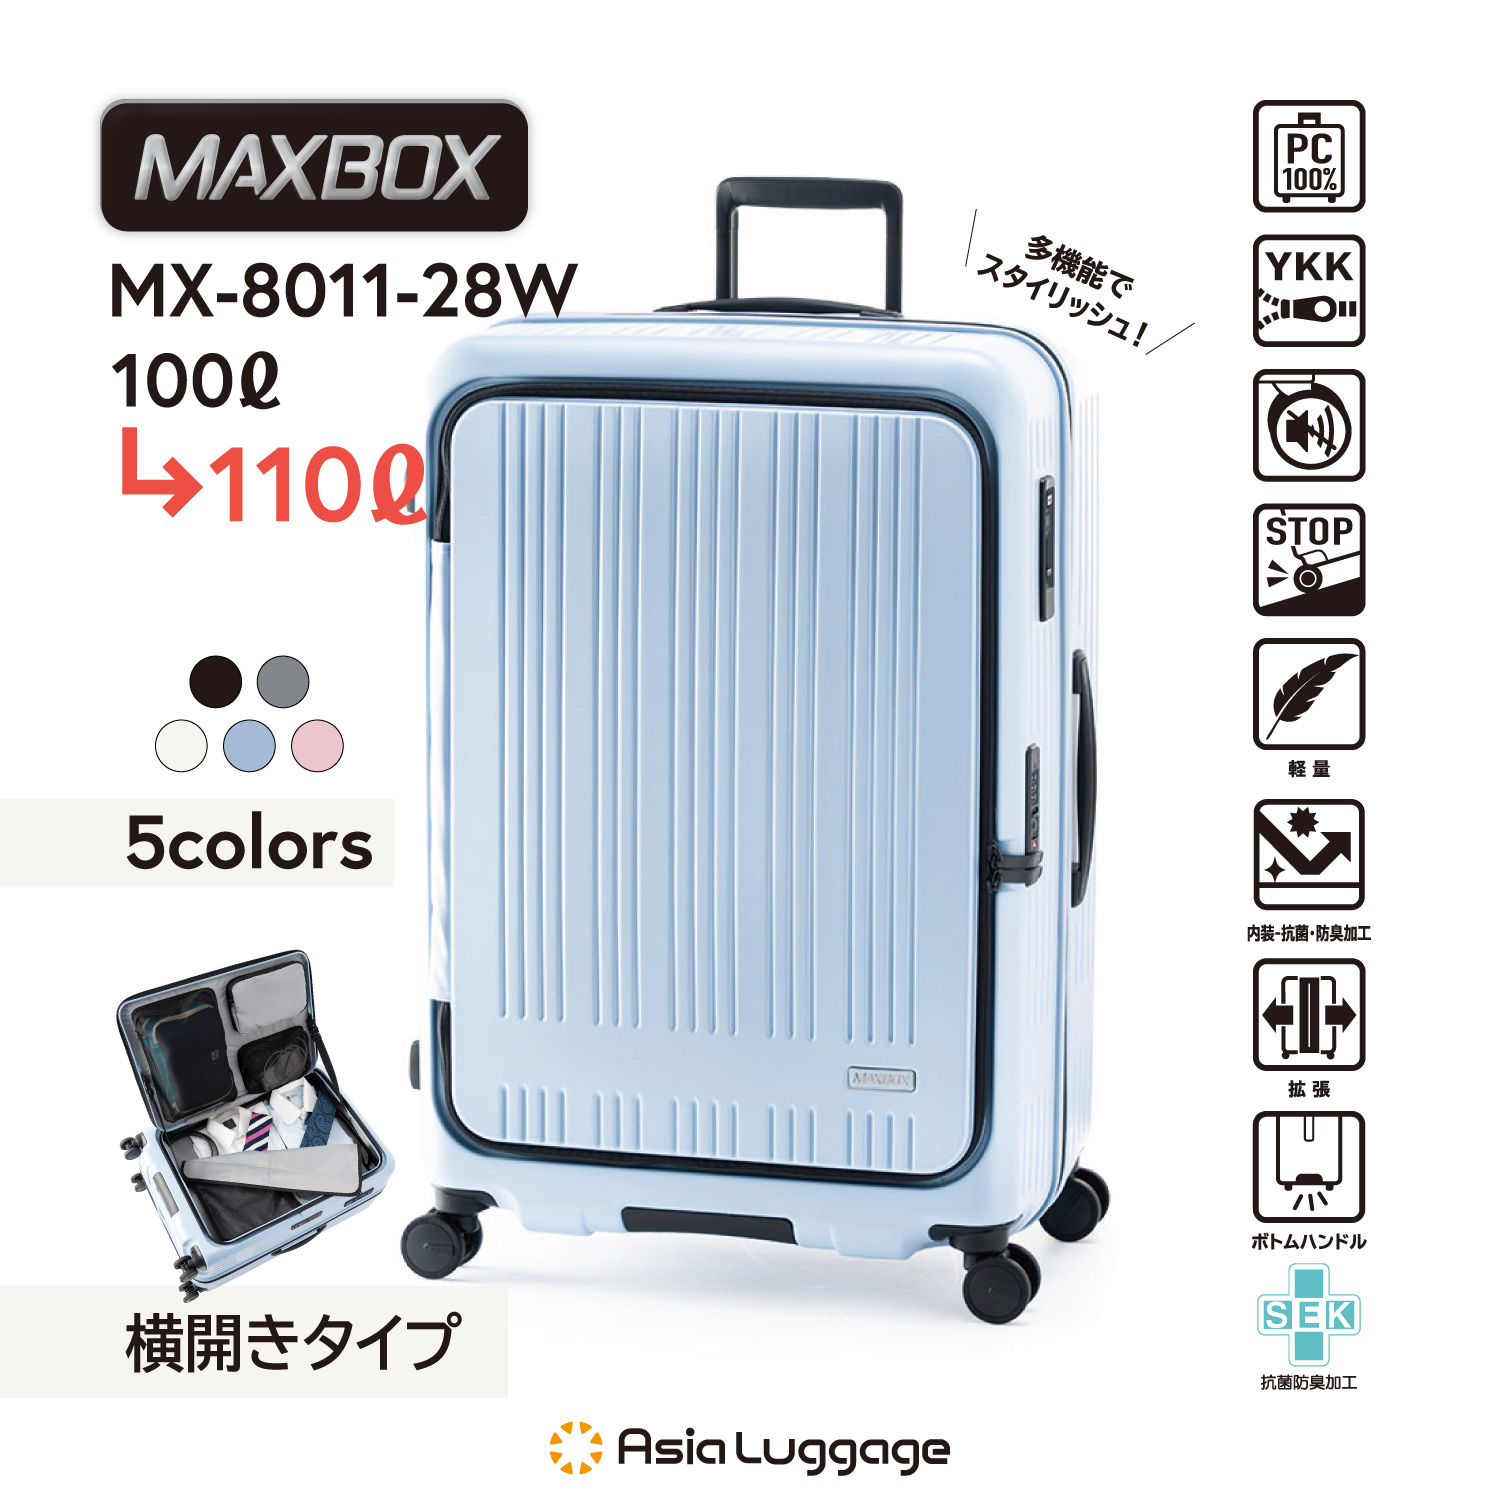 MAXBOX | アジア・ラゲージ 公式サイト | Asia Luggage Inc.